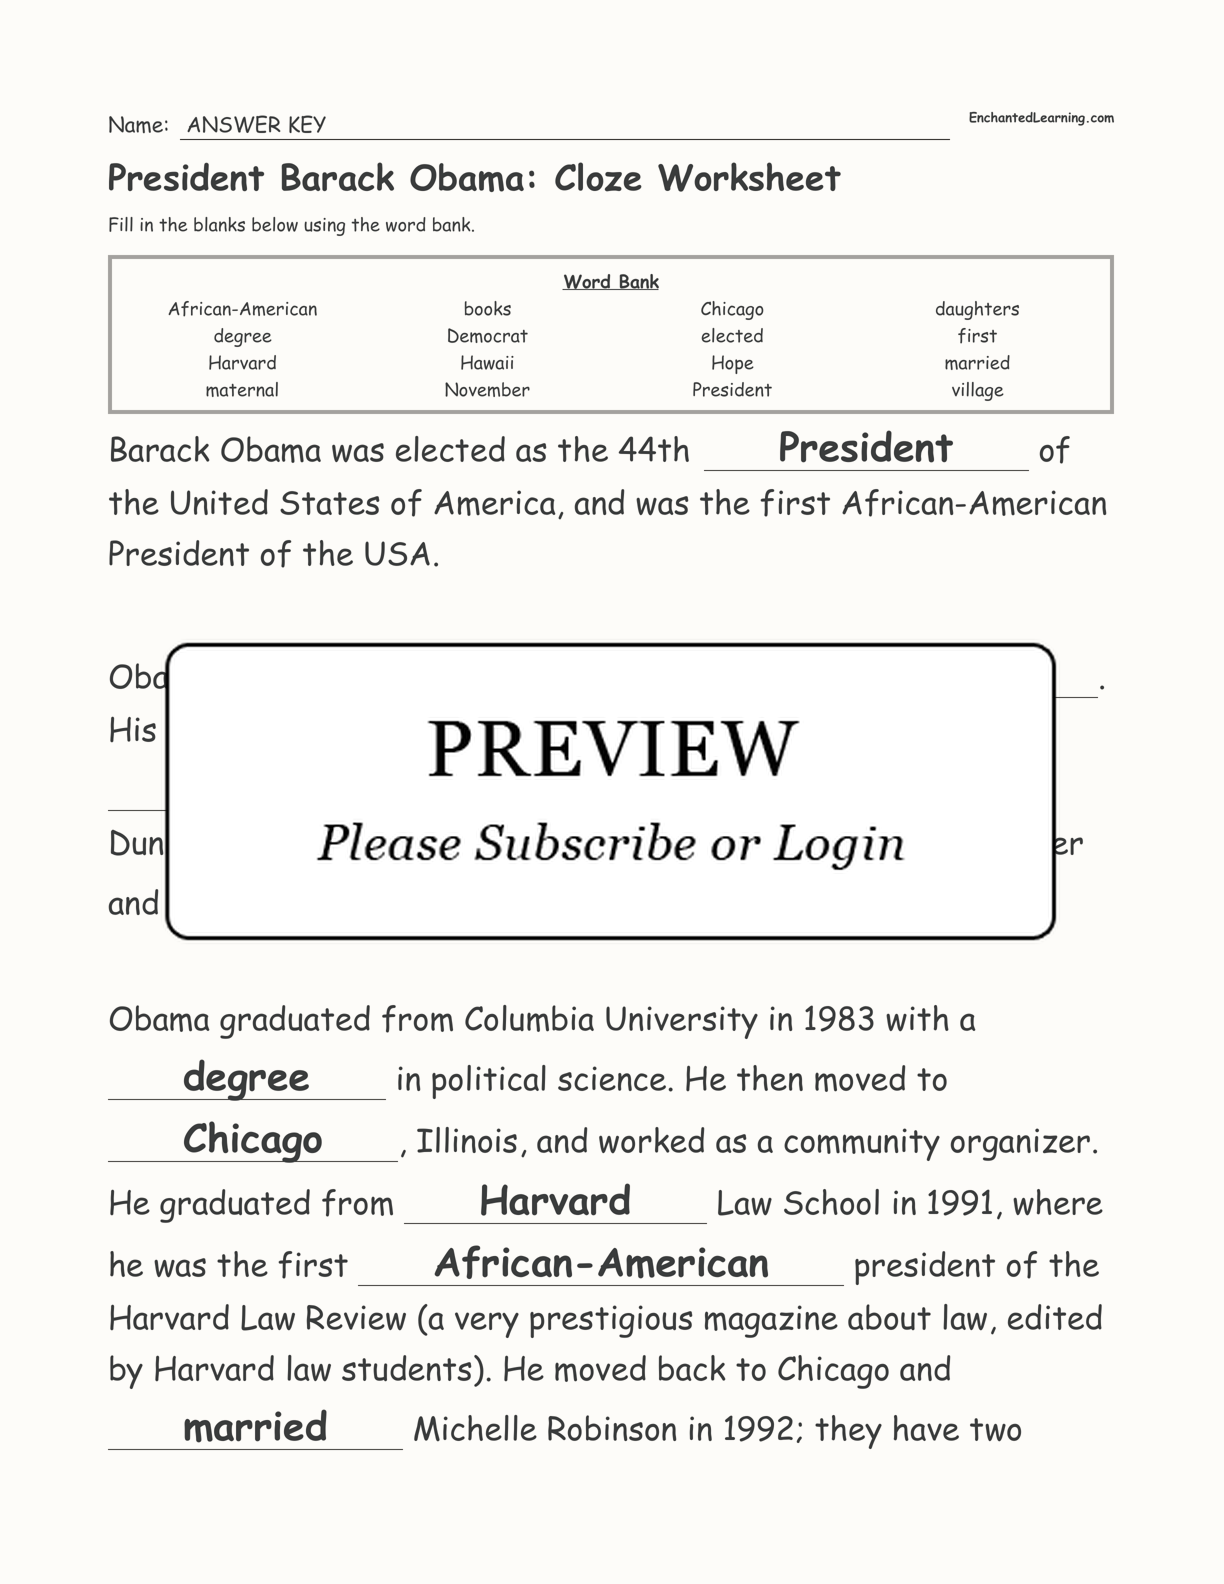 President Barack Obama: Cloze Worksheet interactive worksheet page 3